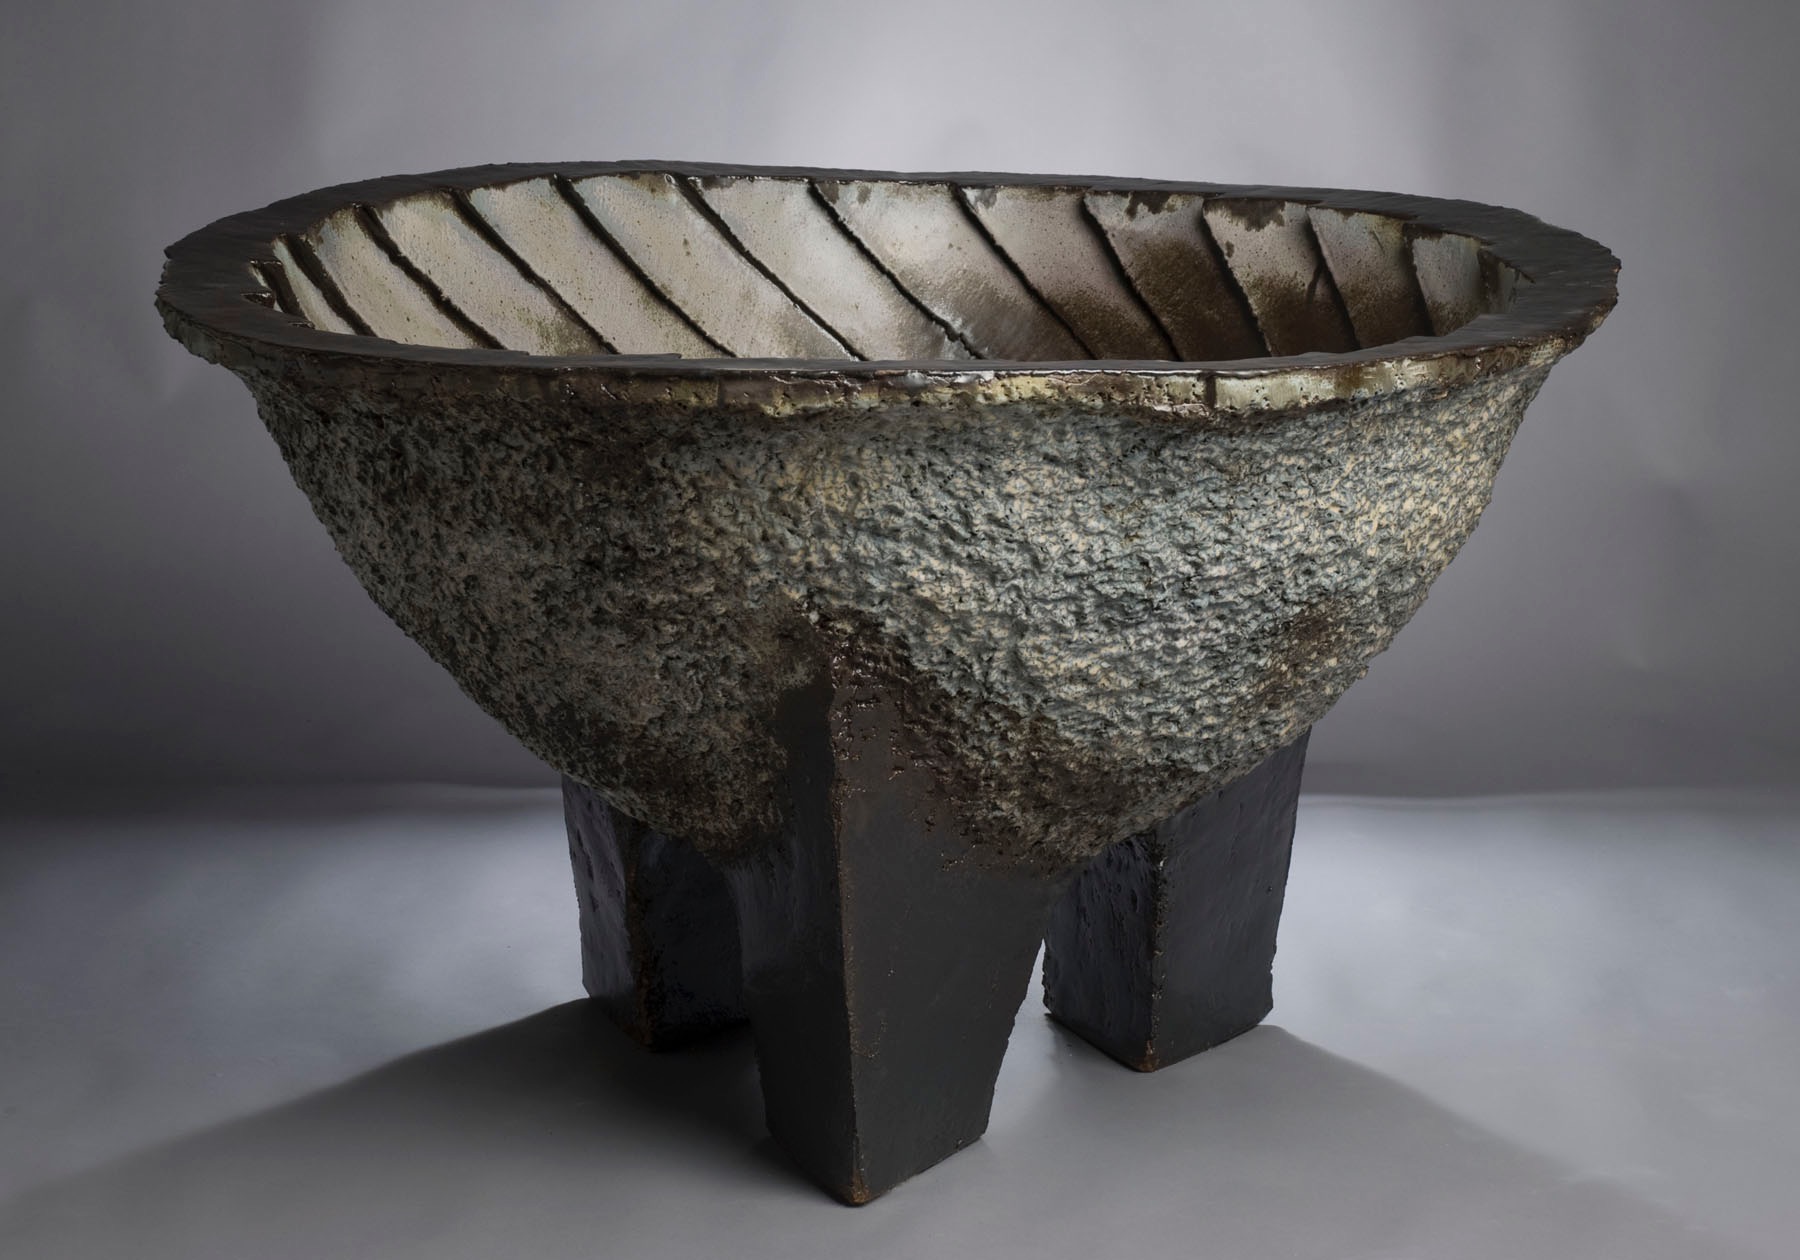 Cauldron with Swirl - Amore Pacific Museum of Art, Korea